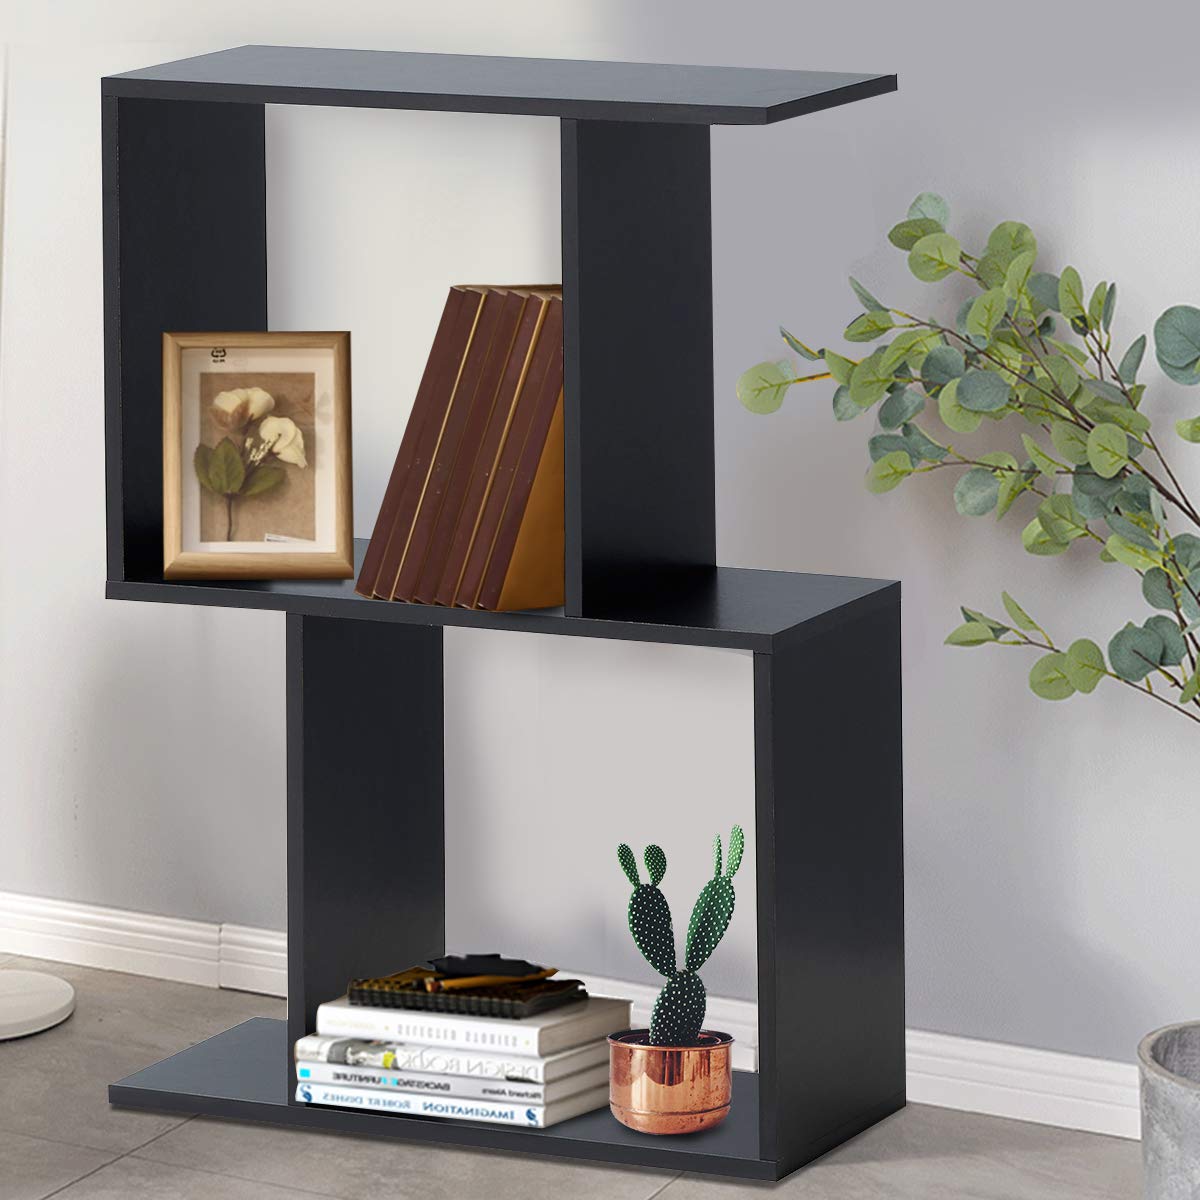 2-Tier Bookshelf S Shaped Bookcase, Free Standing Industrial Storage Rack